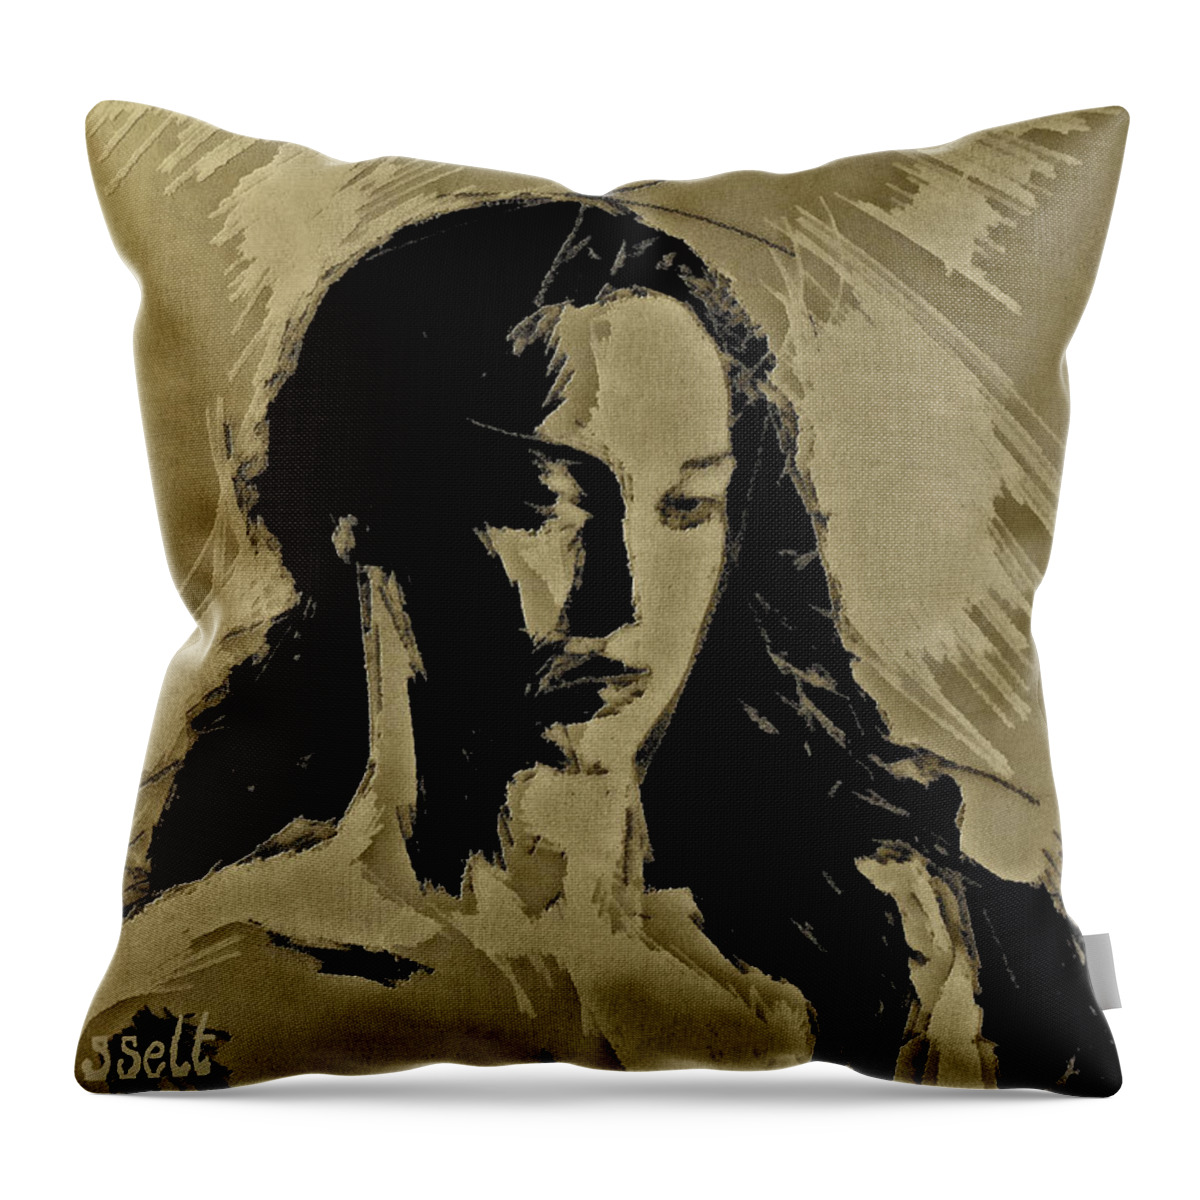 Portrait Throw Pillow featuring the digital art Gold Portrait Female by Humphrey Isselt